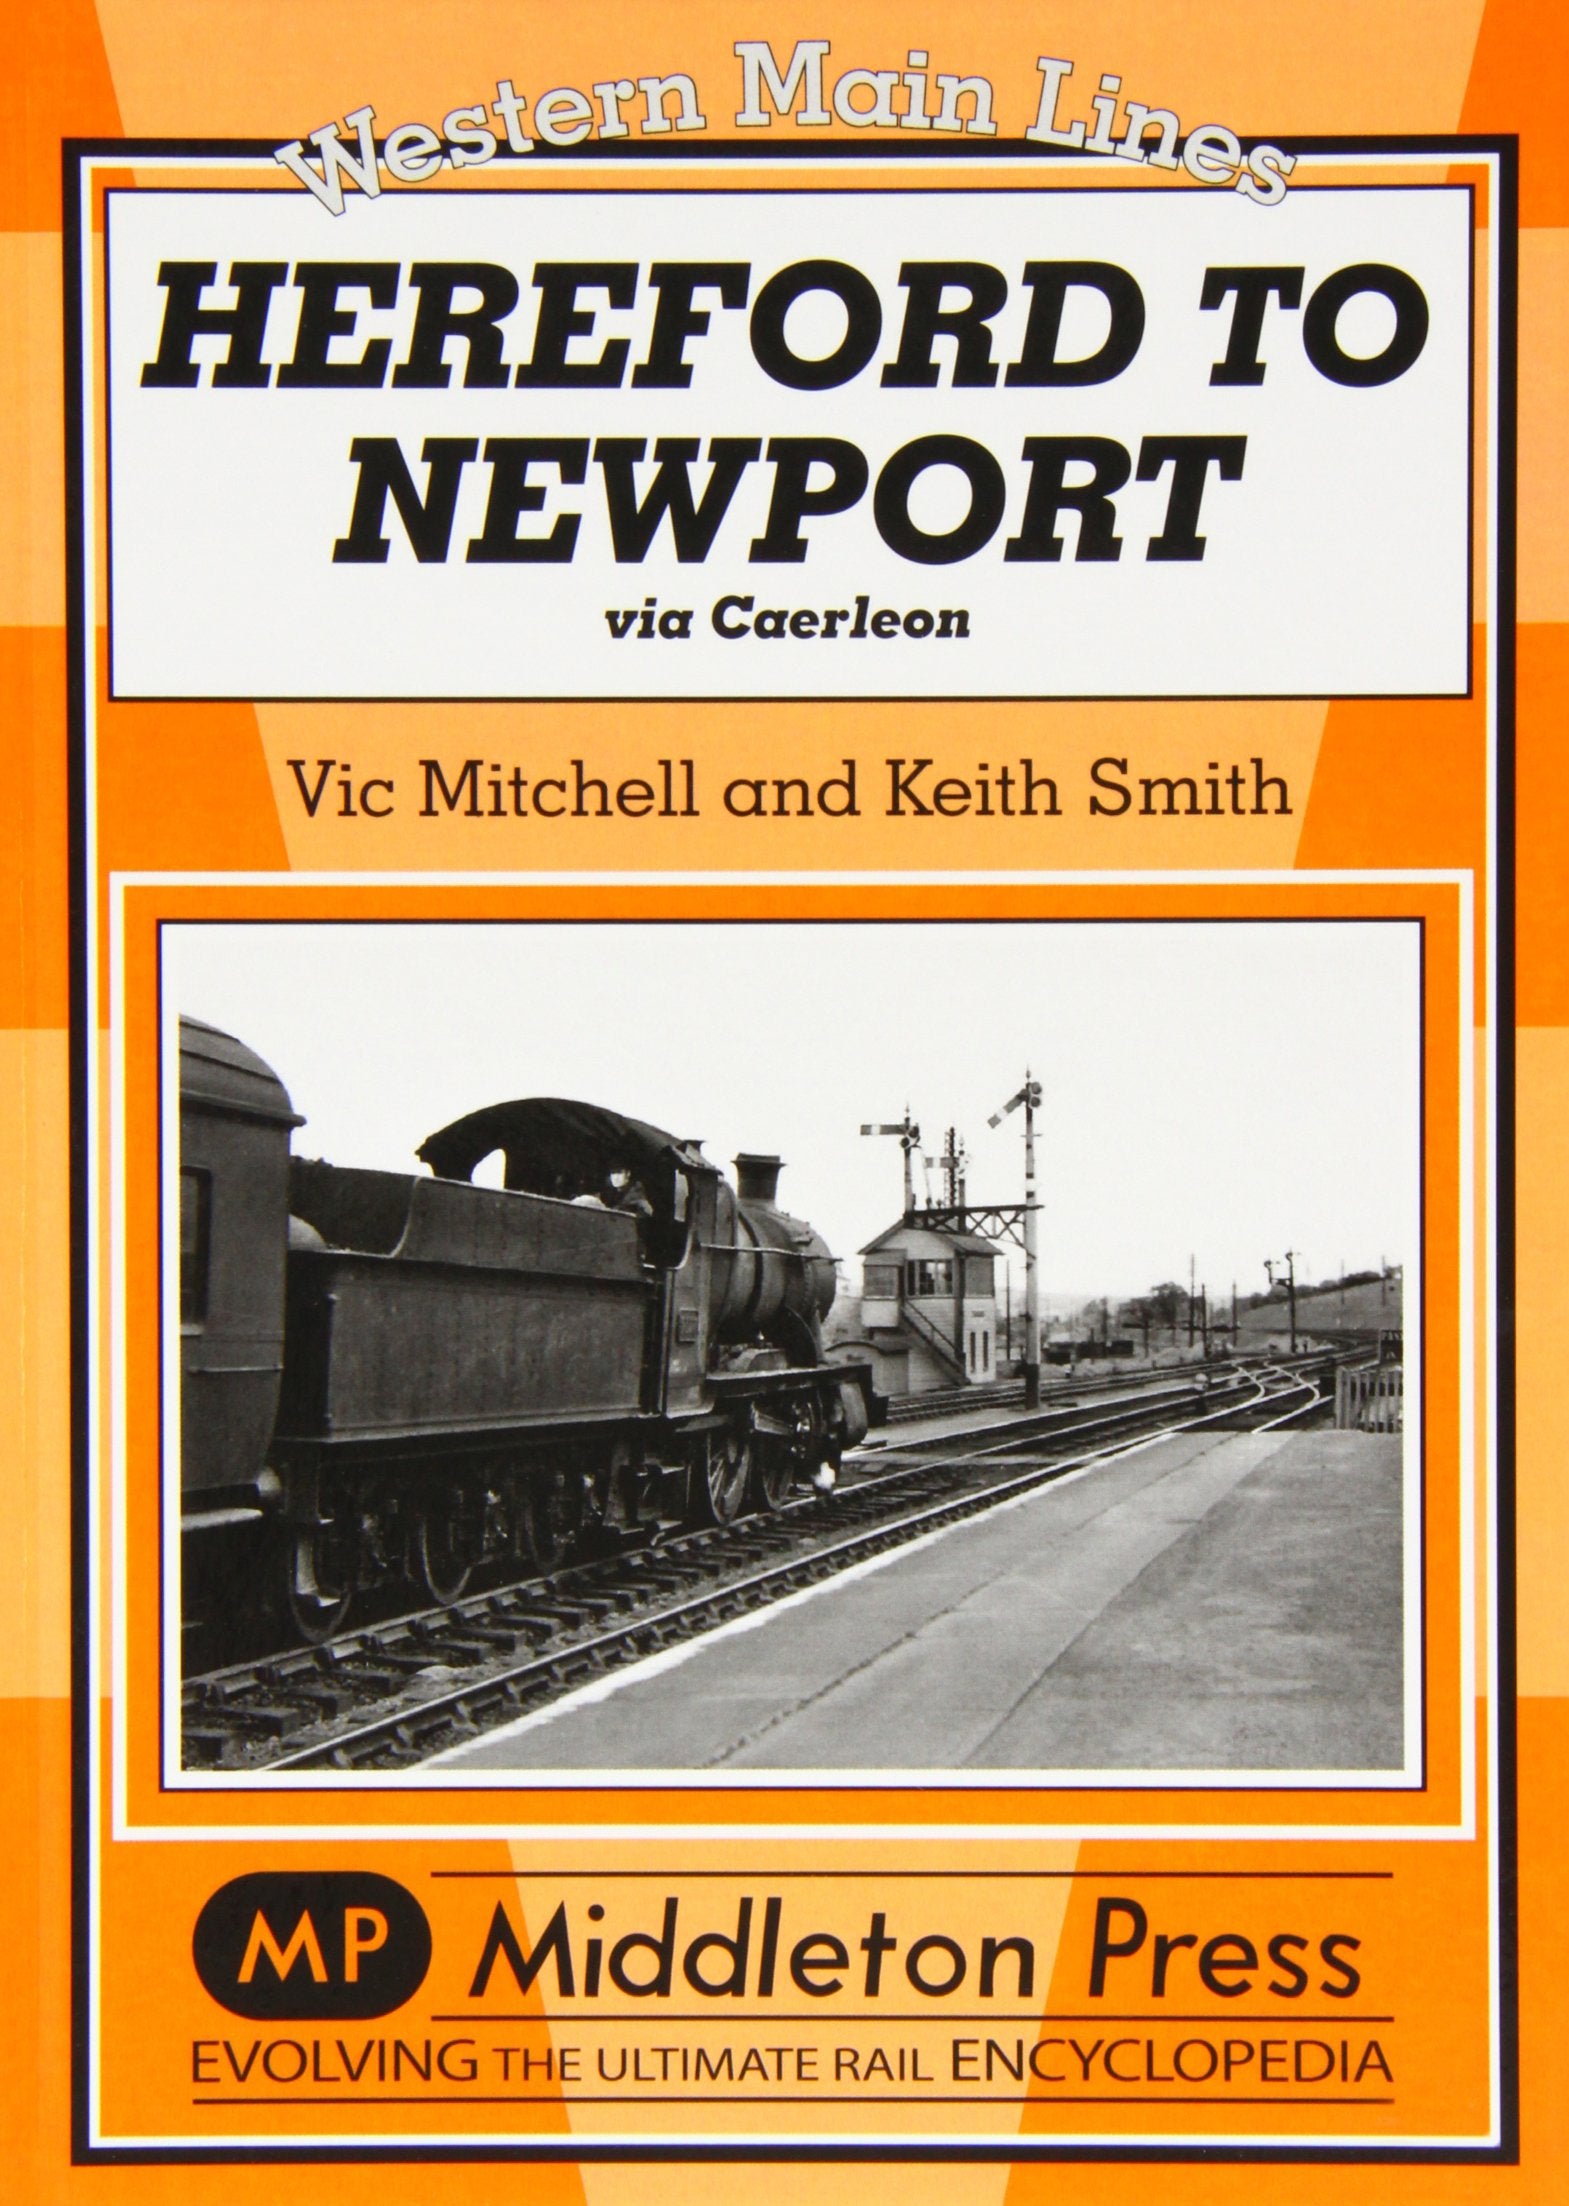 Western Main Lines Hereford to Newport via Caerleon